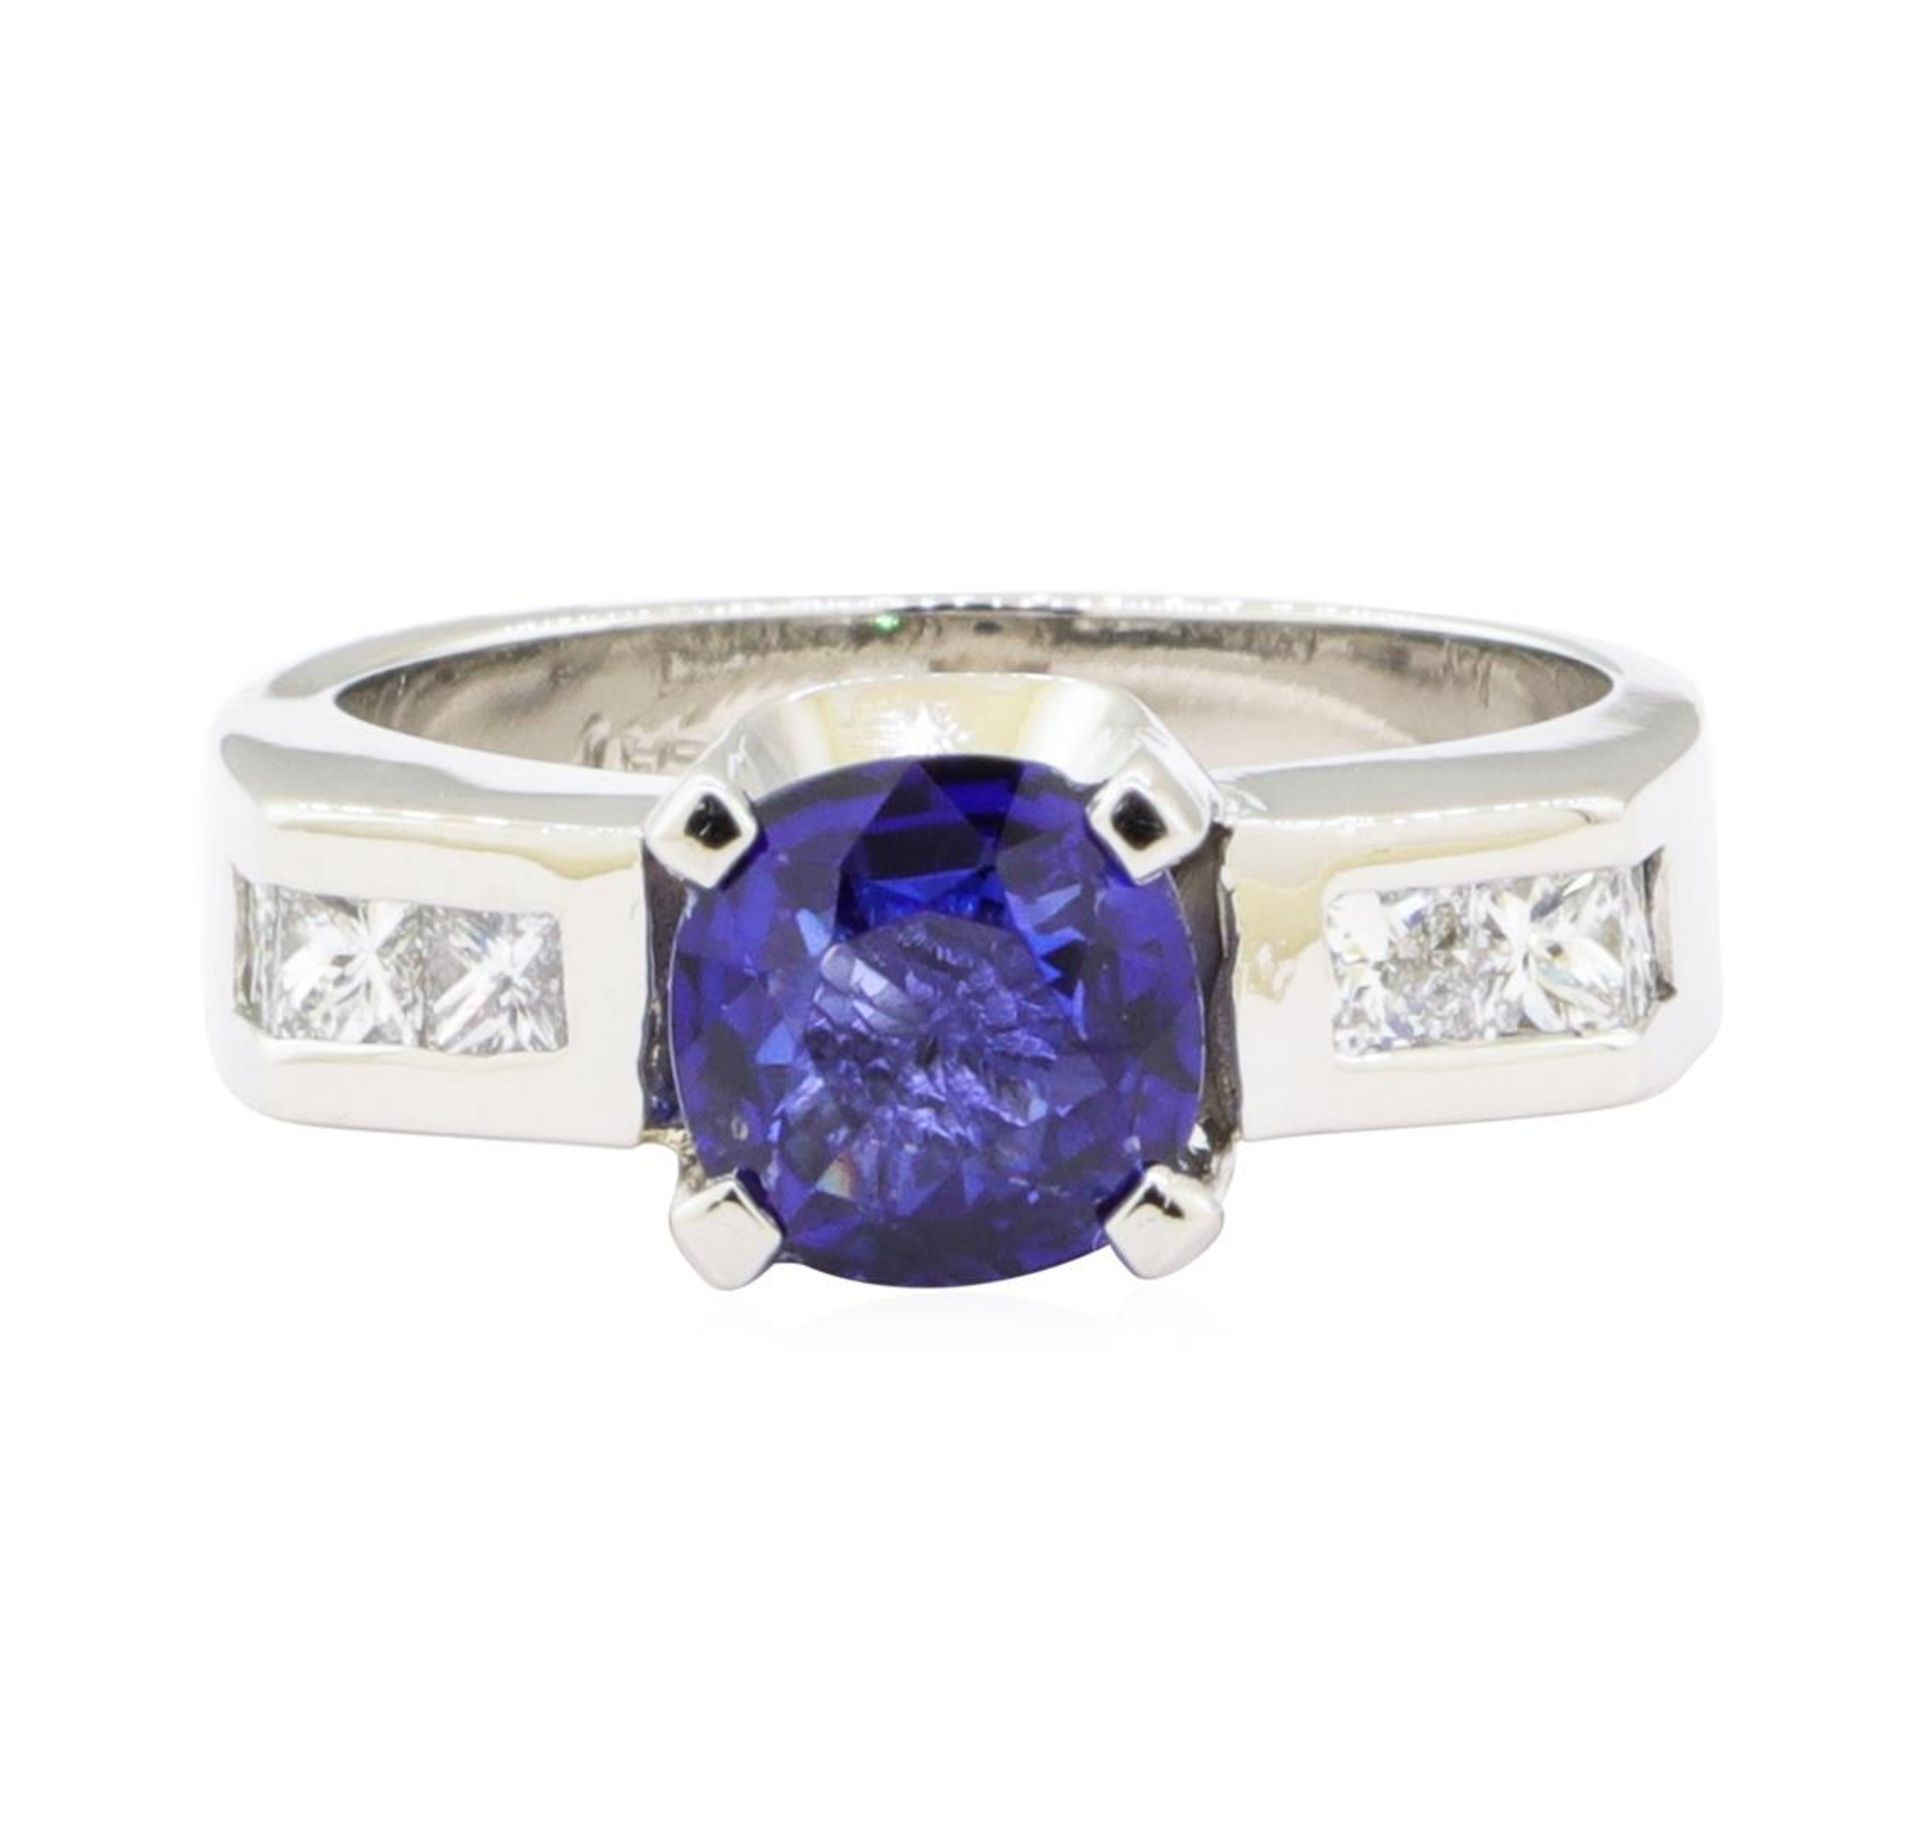 1.98 ctw Sapphire And Diamond Ring - Platinum - Image 2 of 5